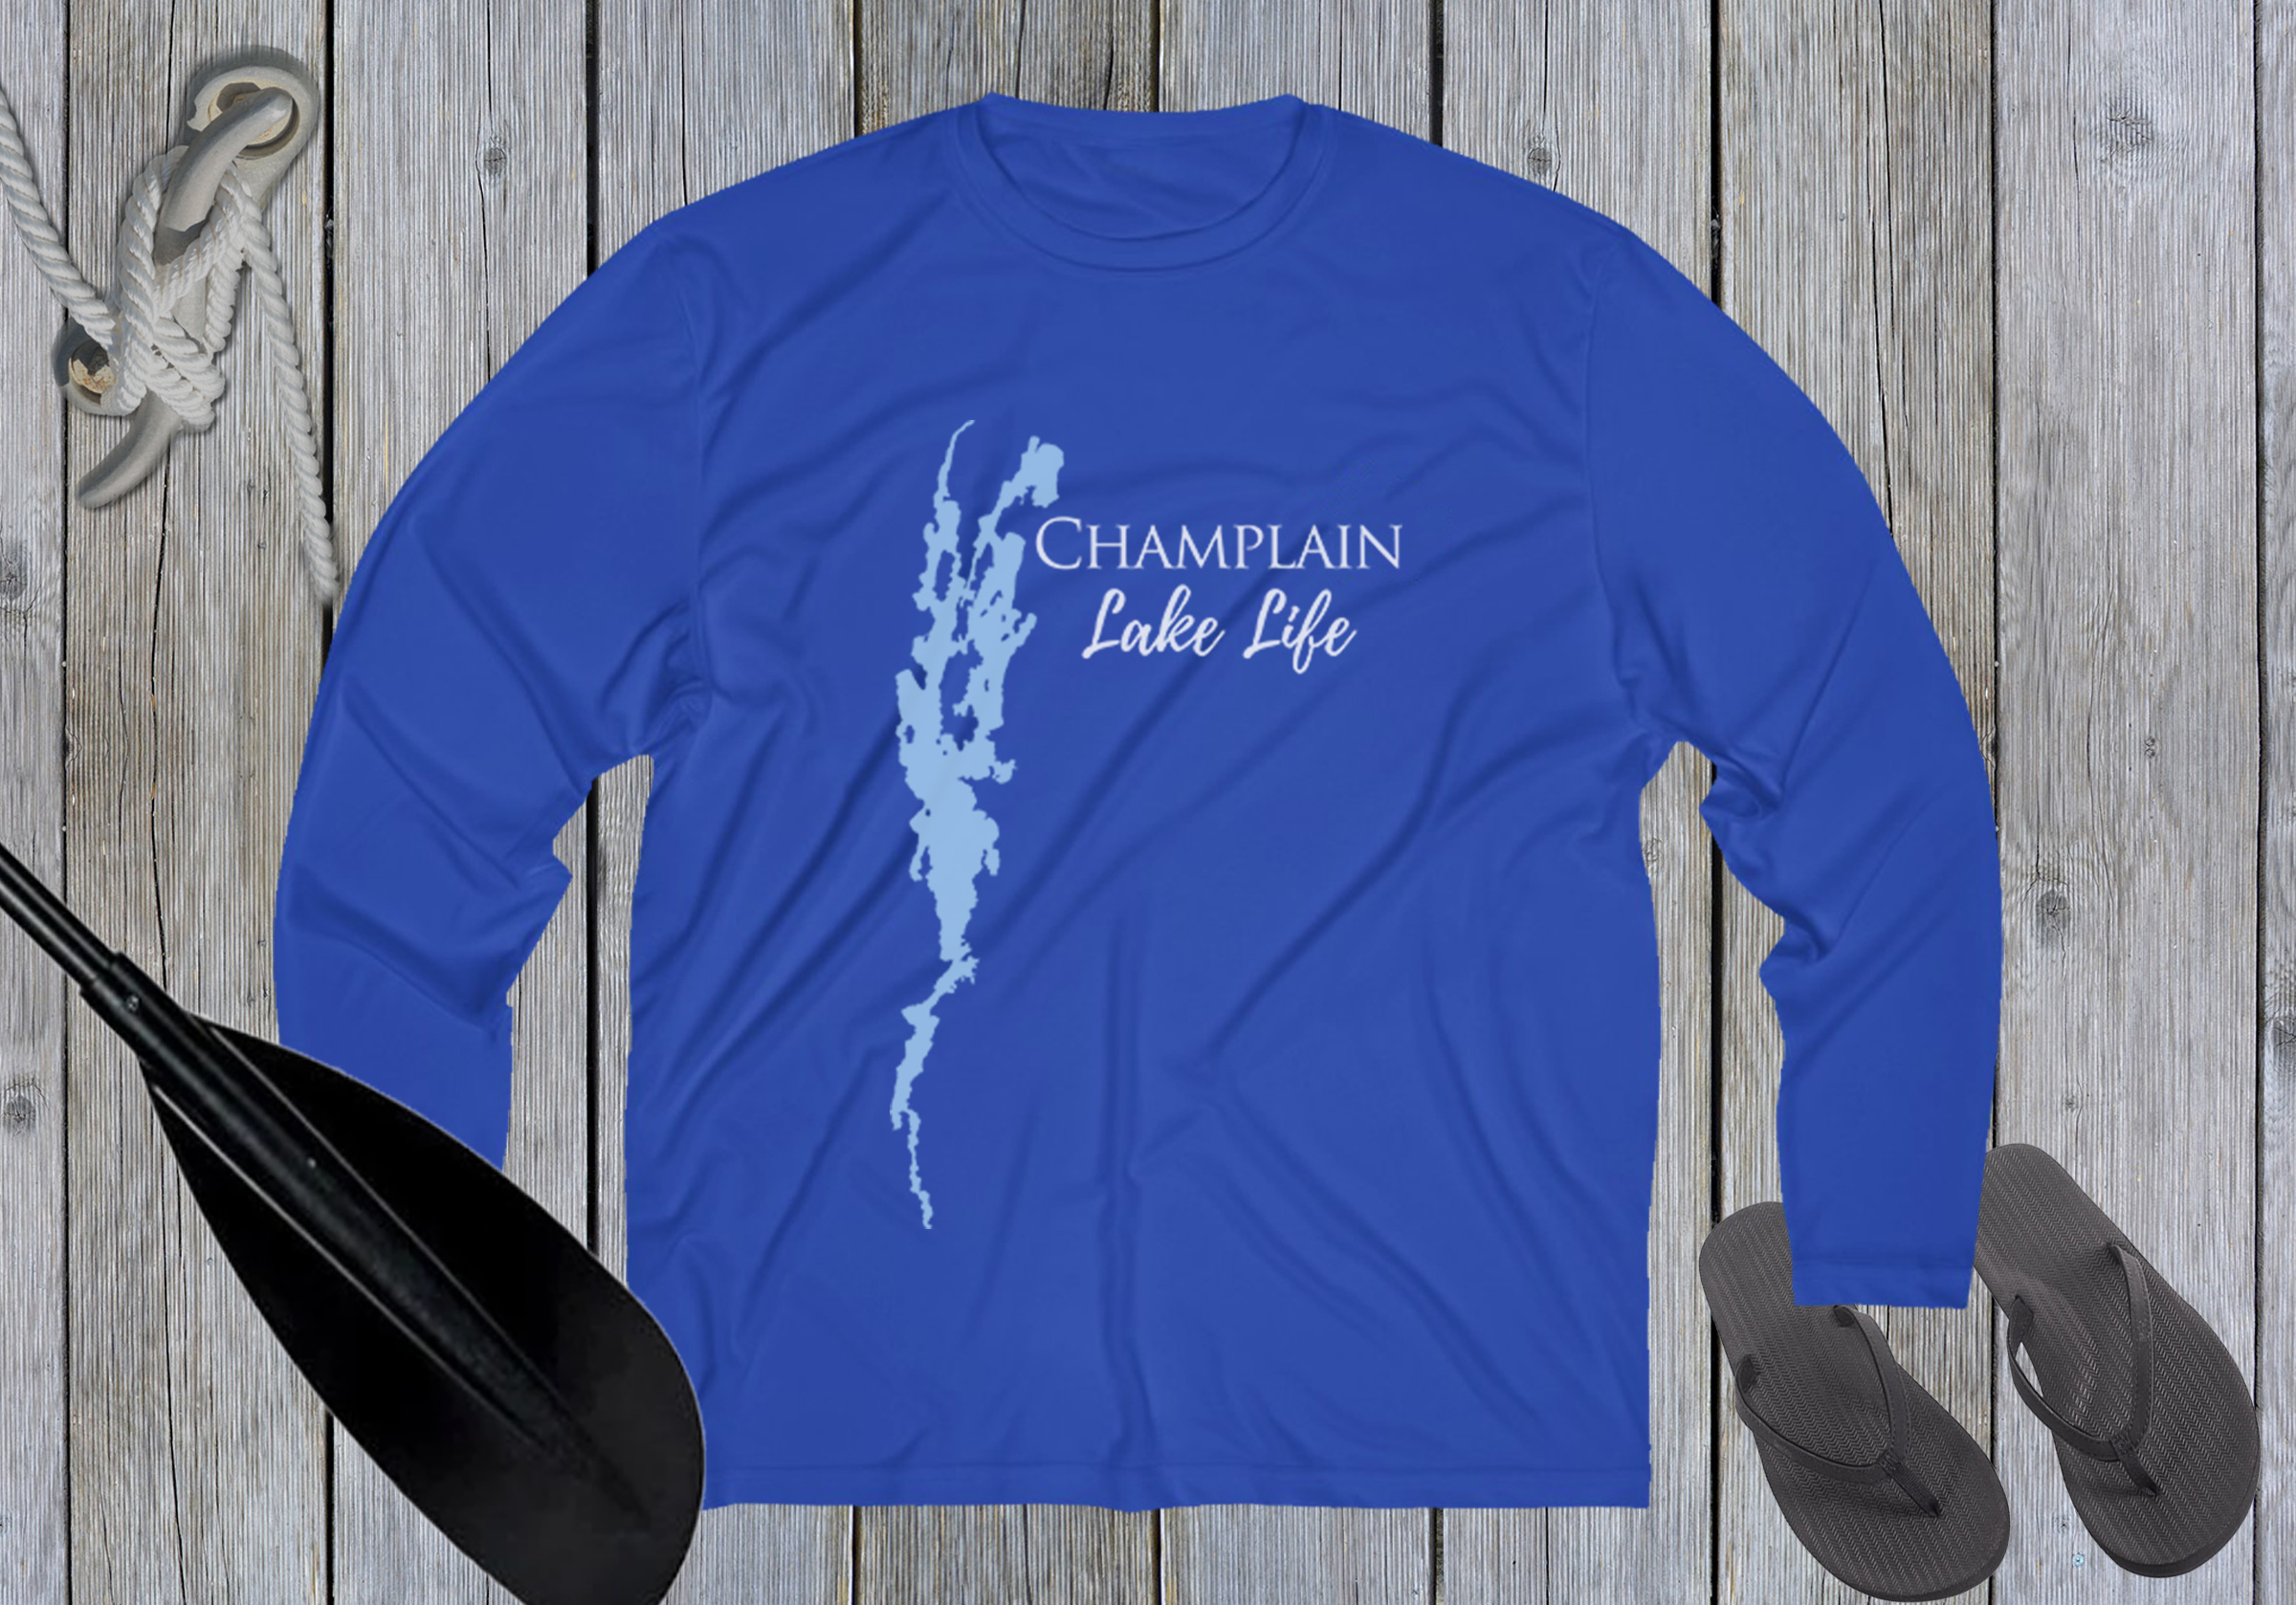 Champlain Lake Life Dri-fit Boating Shirt - Breathable Material- Men's Long Sleeve Moisture Wicking Tee - New York & Vermont Lake